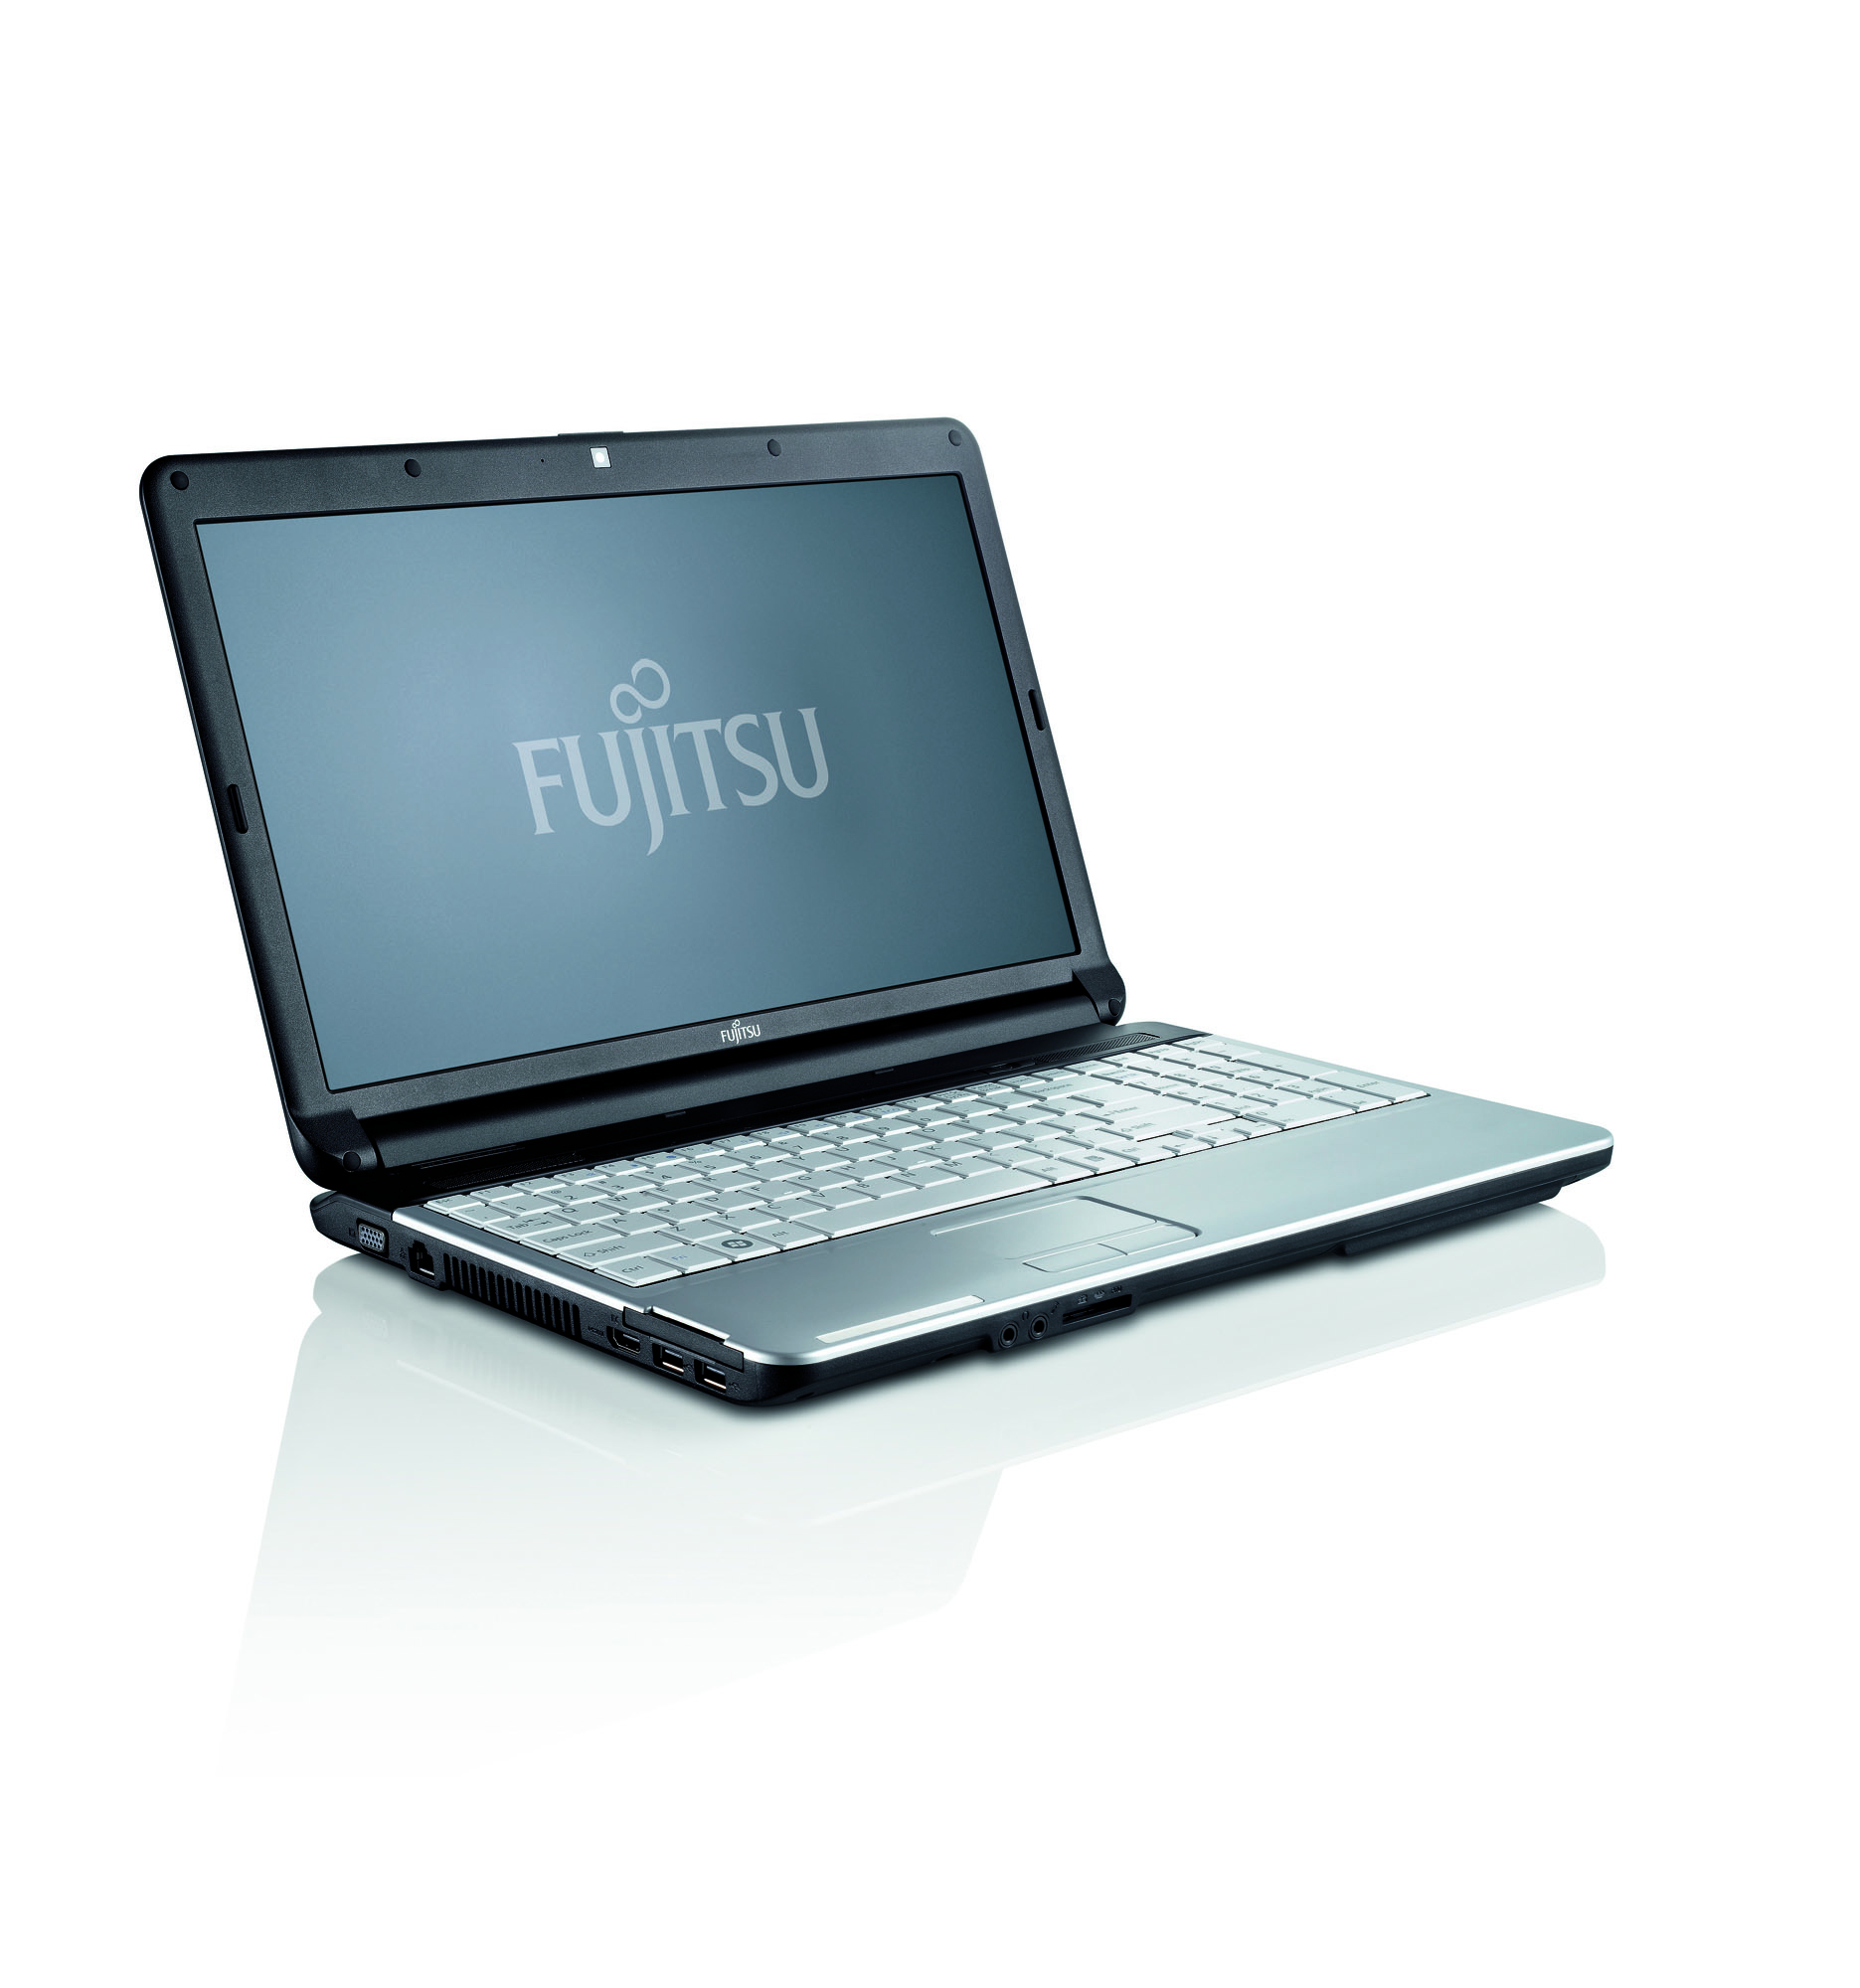 Fujitsu Lifebook Lh531 Drivers Windows 7 64 Bit